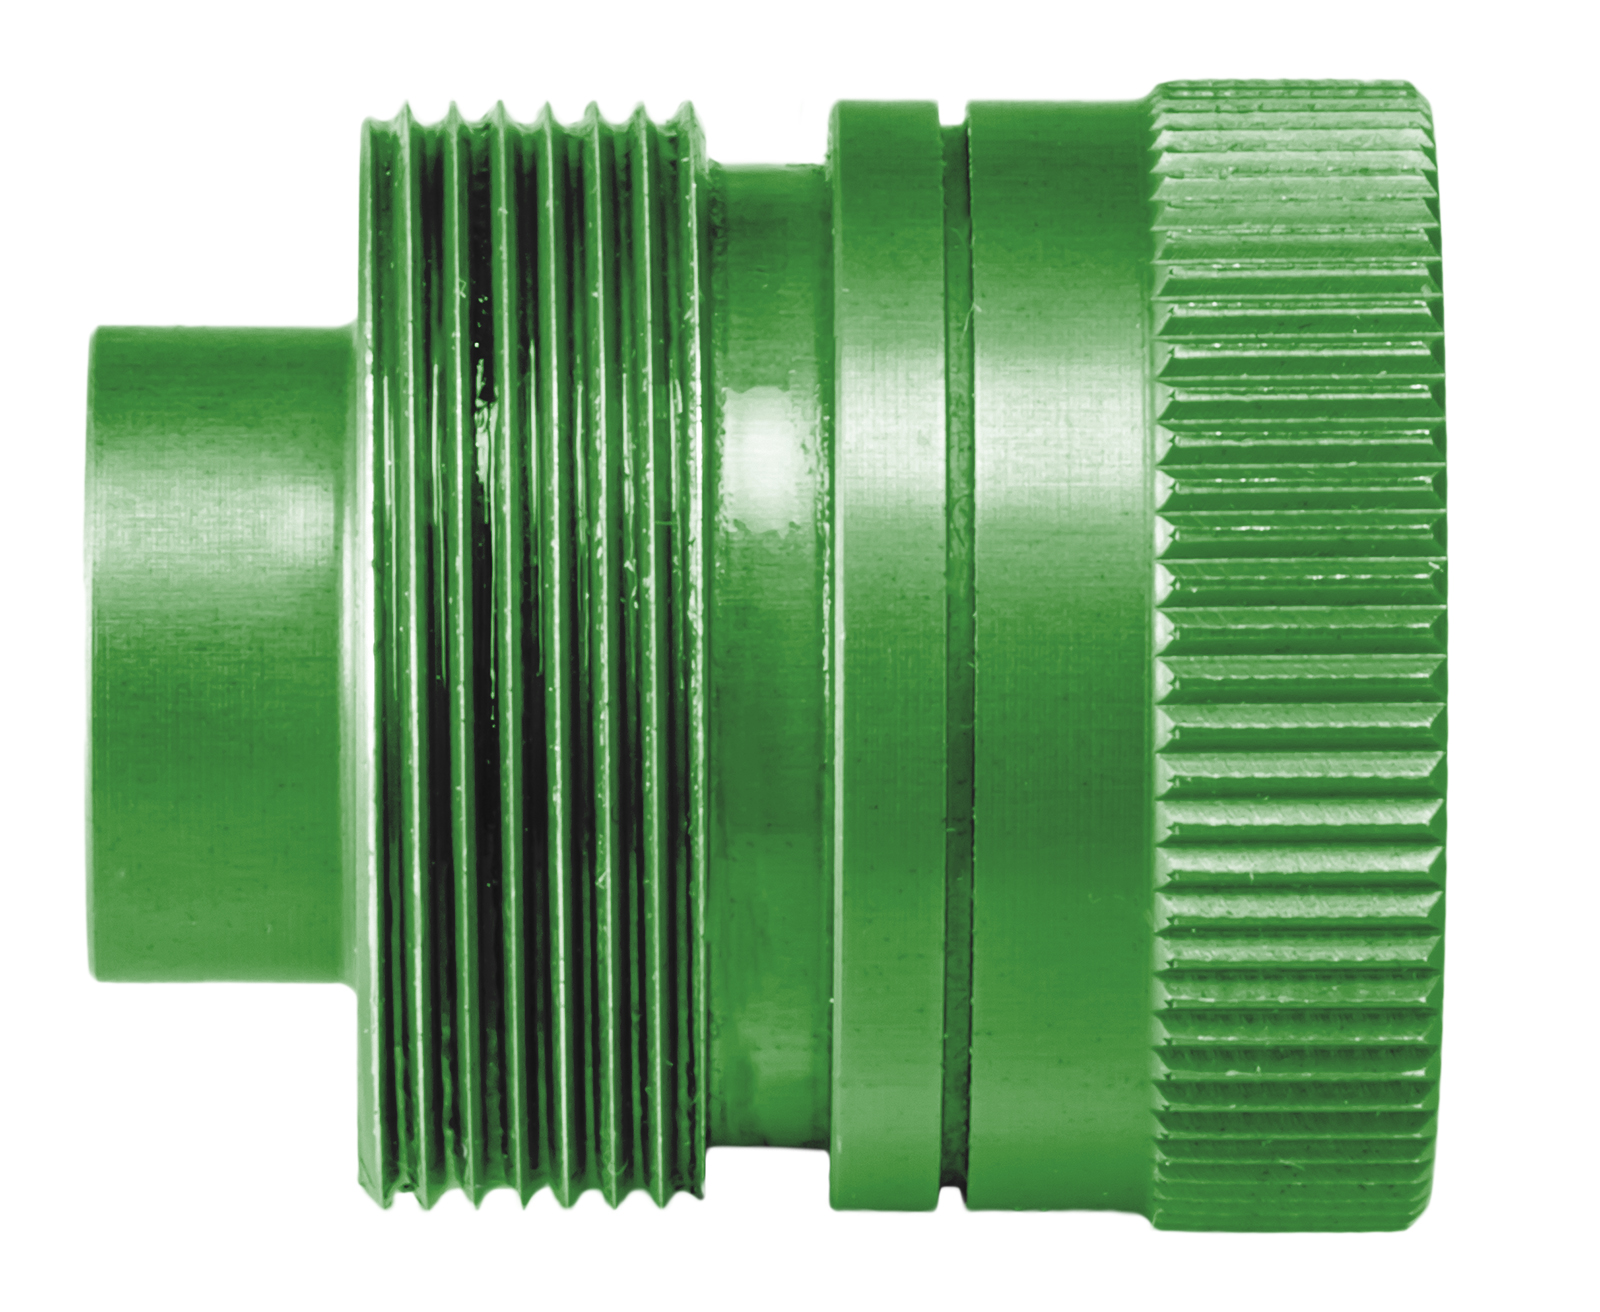 End cap for dispensing valve